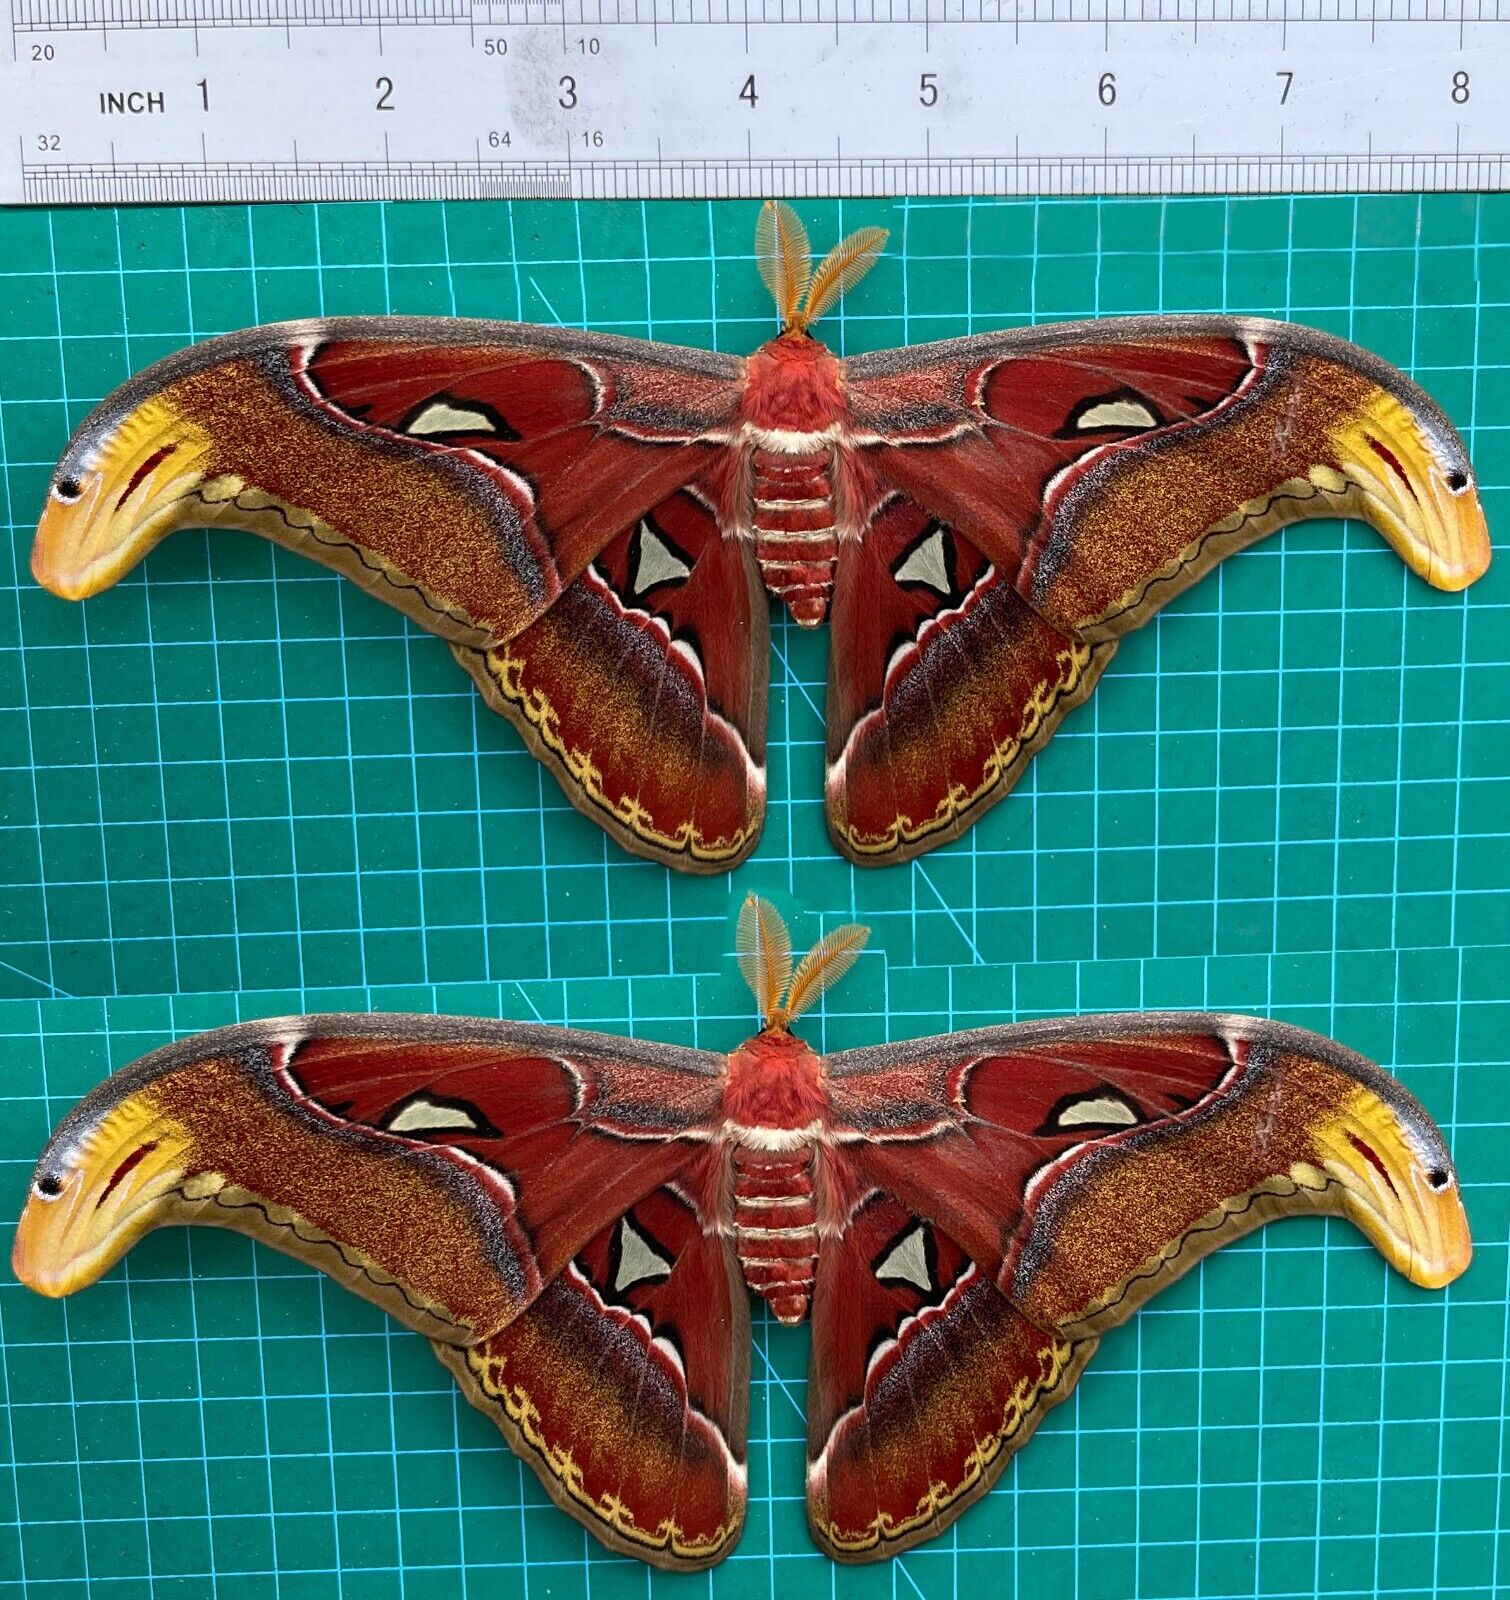 2 Real Atlas Moth Spread Taxidermy Butterfly Specimen Art Entomology Collection